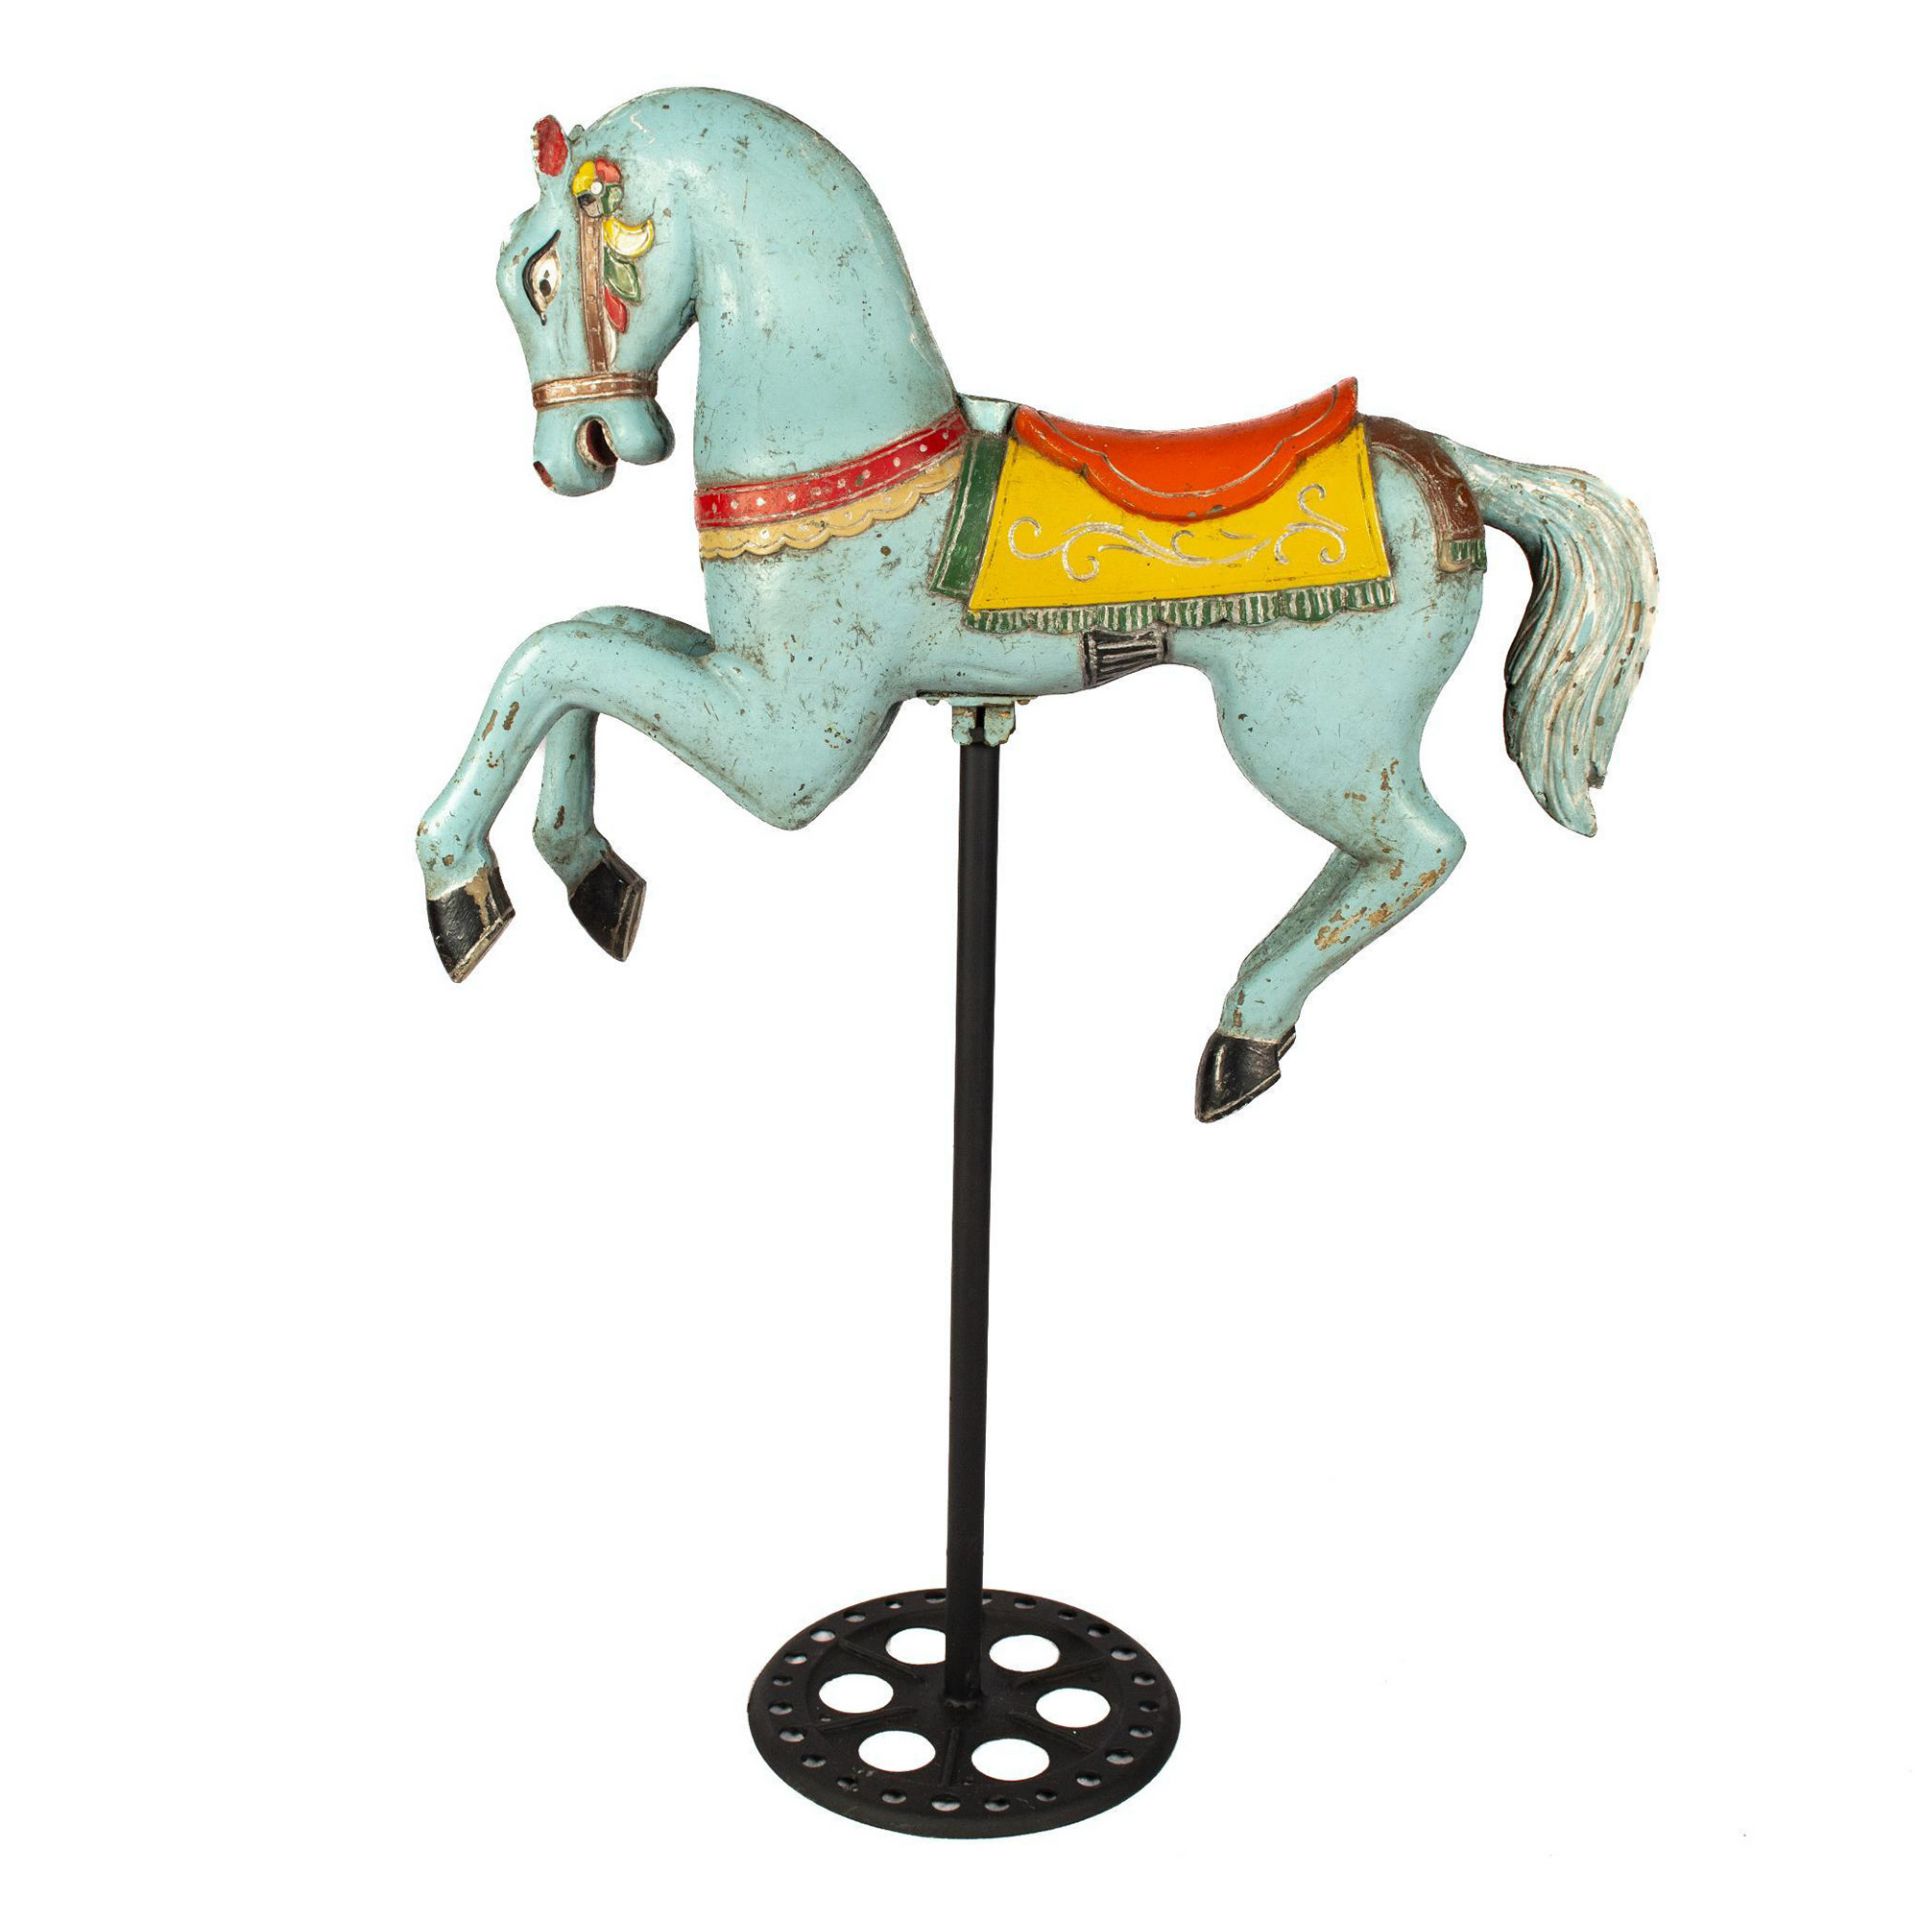 Antique Carnival Fiberglass Carousel Horse - Image 3 of 6